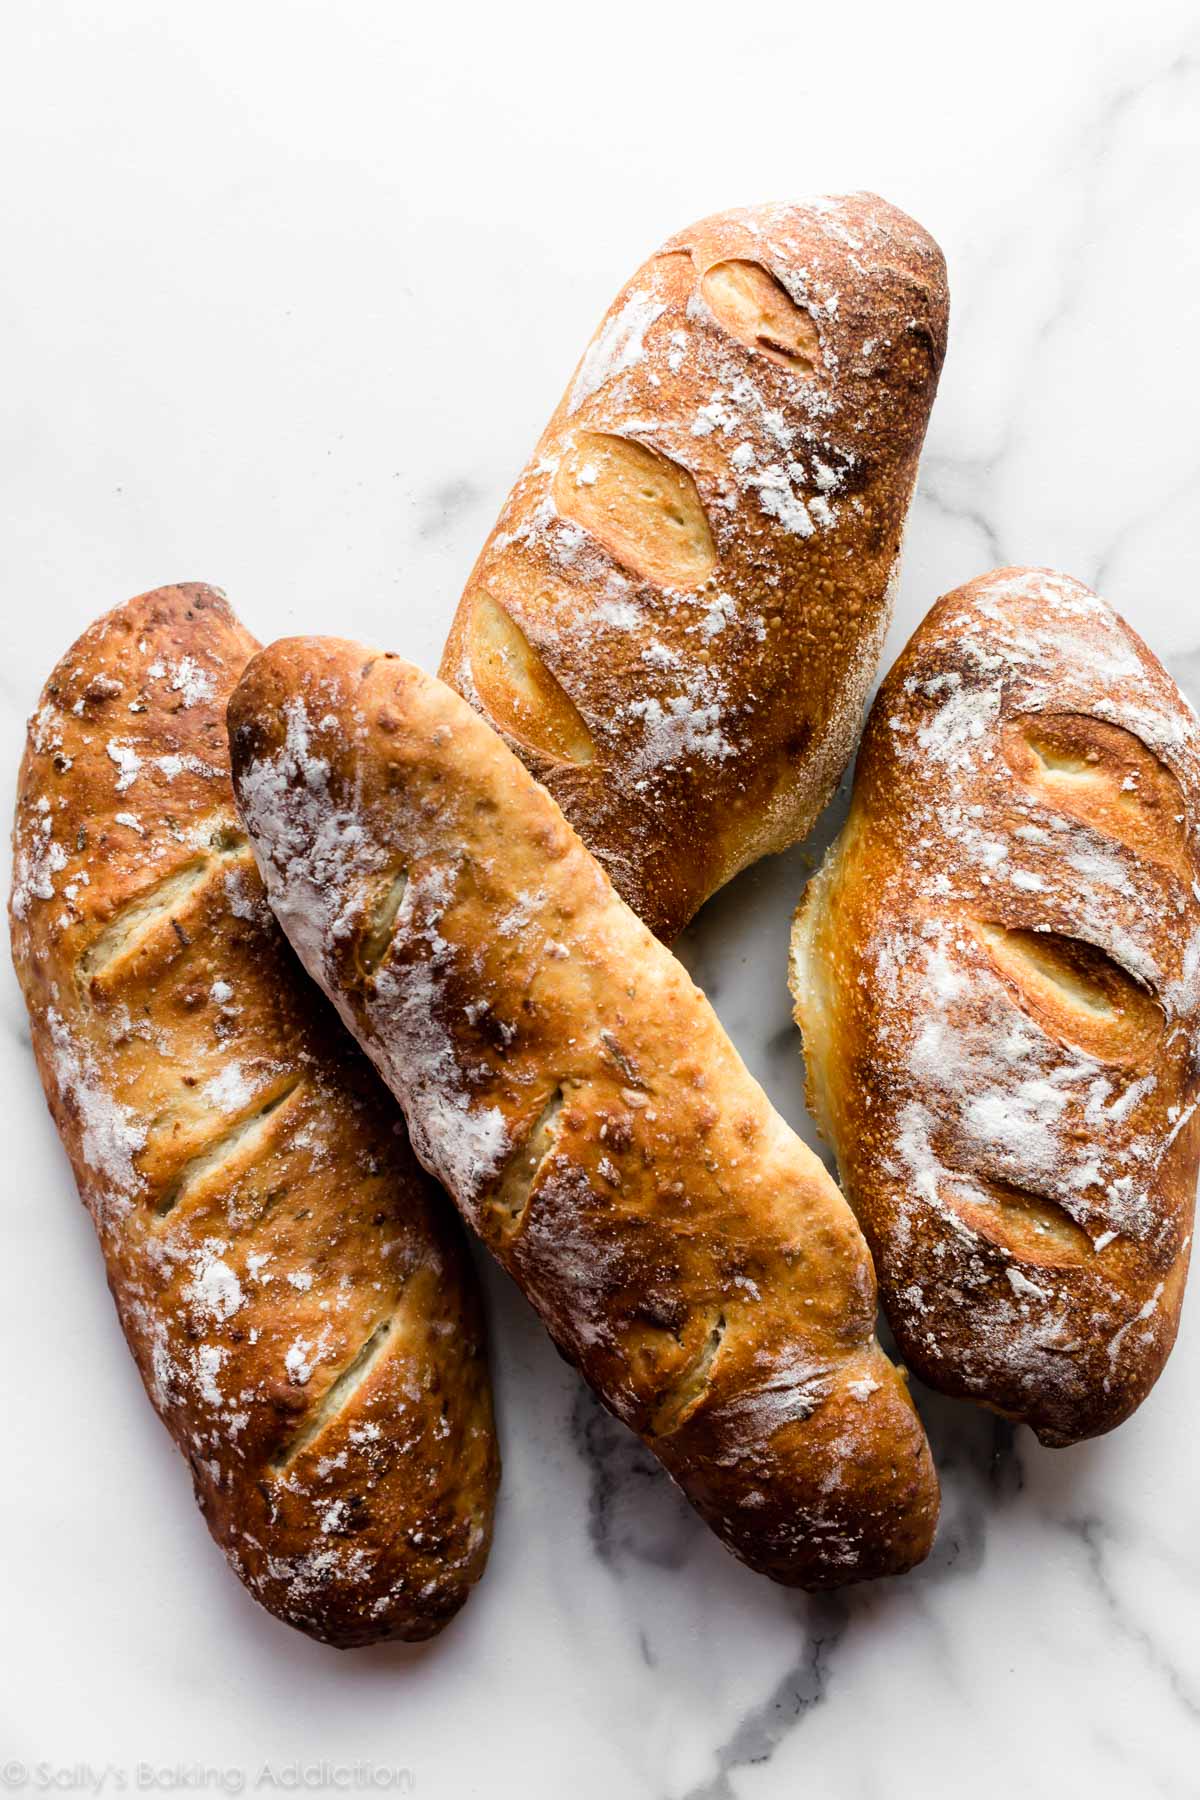 https://sallysbakingaddiction.com/wp-content/uploads/2019/12/homemade-artisan-bread.jpg